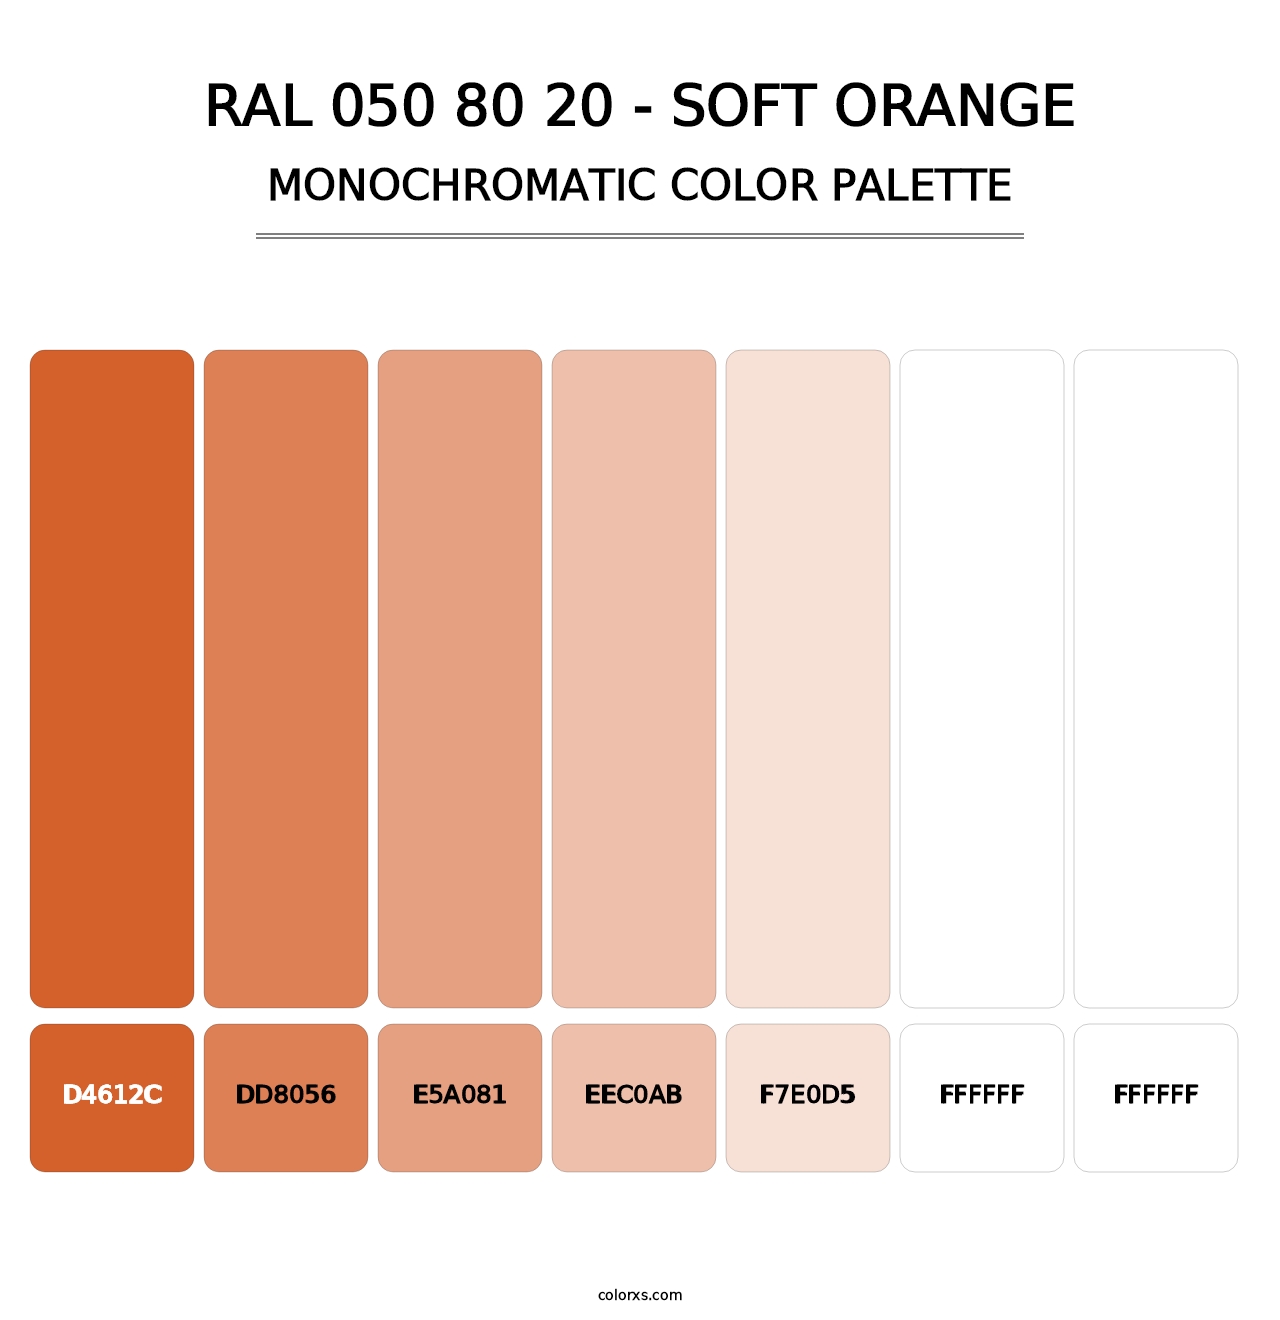 RAL 050 80 20 - Soft Orange - Monochromatic Color Palette